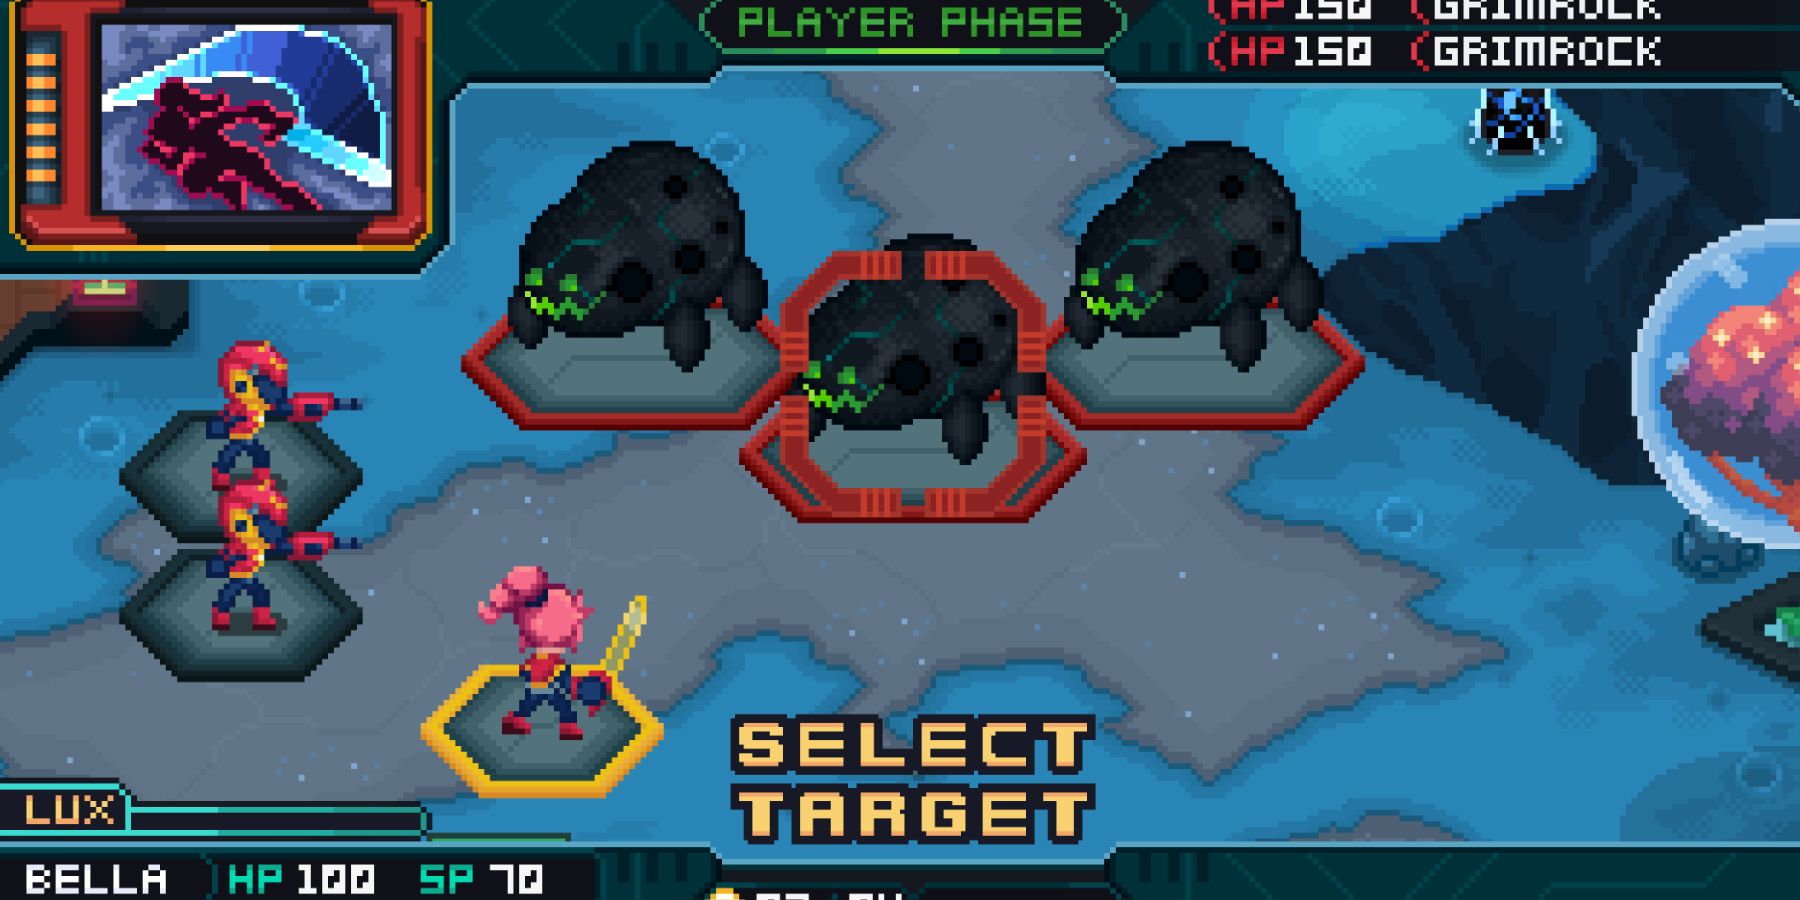 lunarlux-player-turn-choice-screenshot